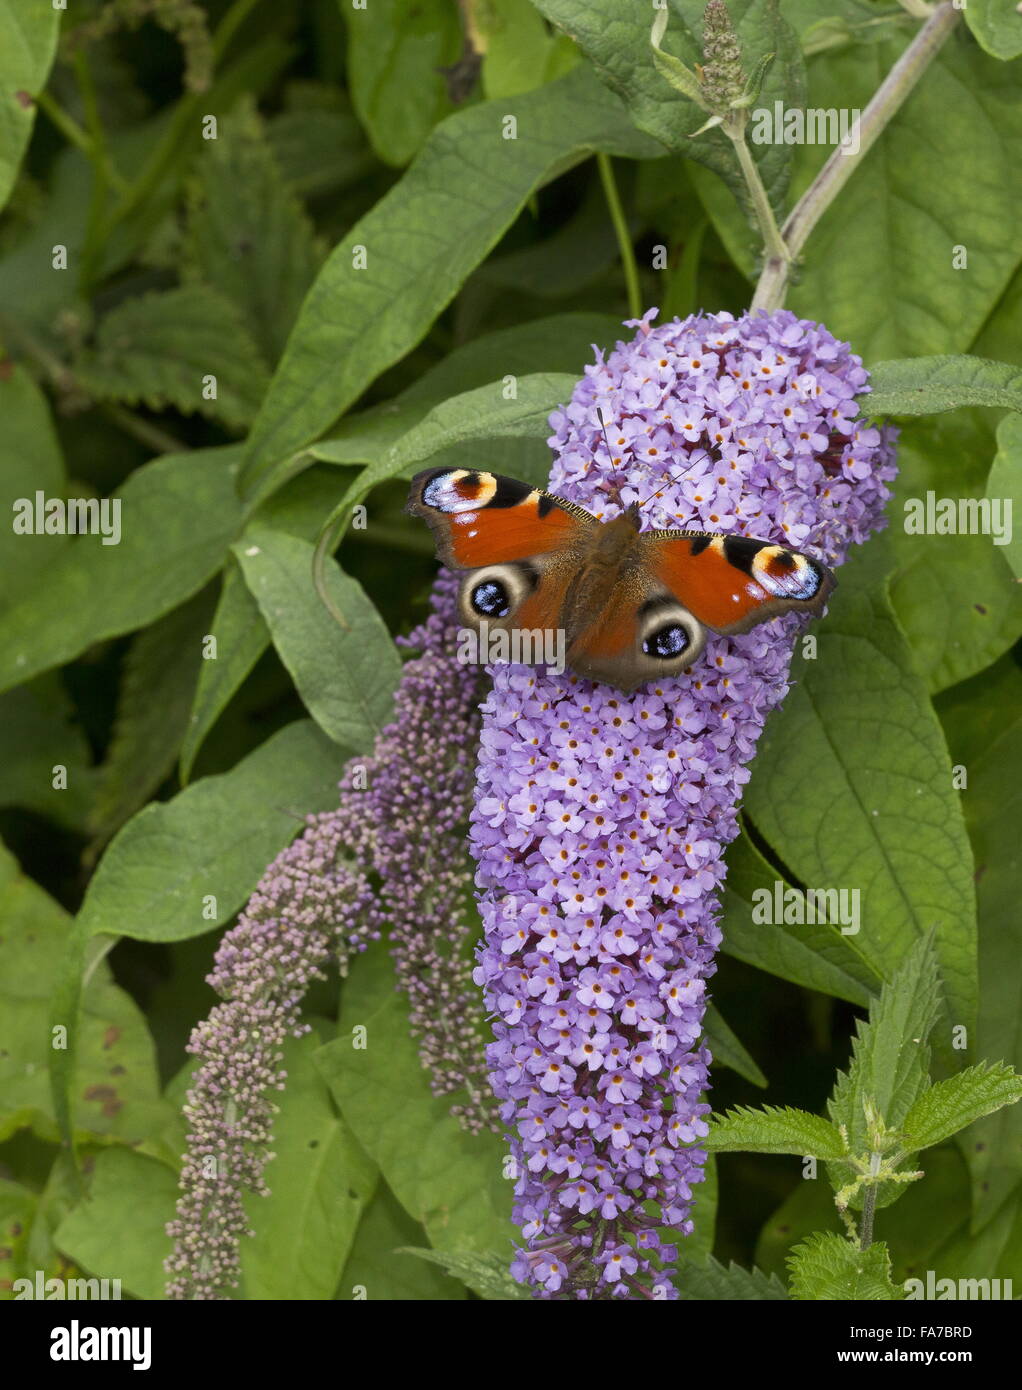 Mariposa pavo real alimentándose de mariposas, flores de Bush Buddleia davidii. Foto de stock